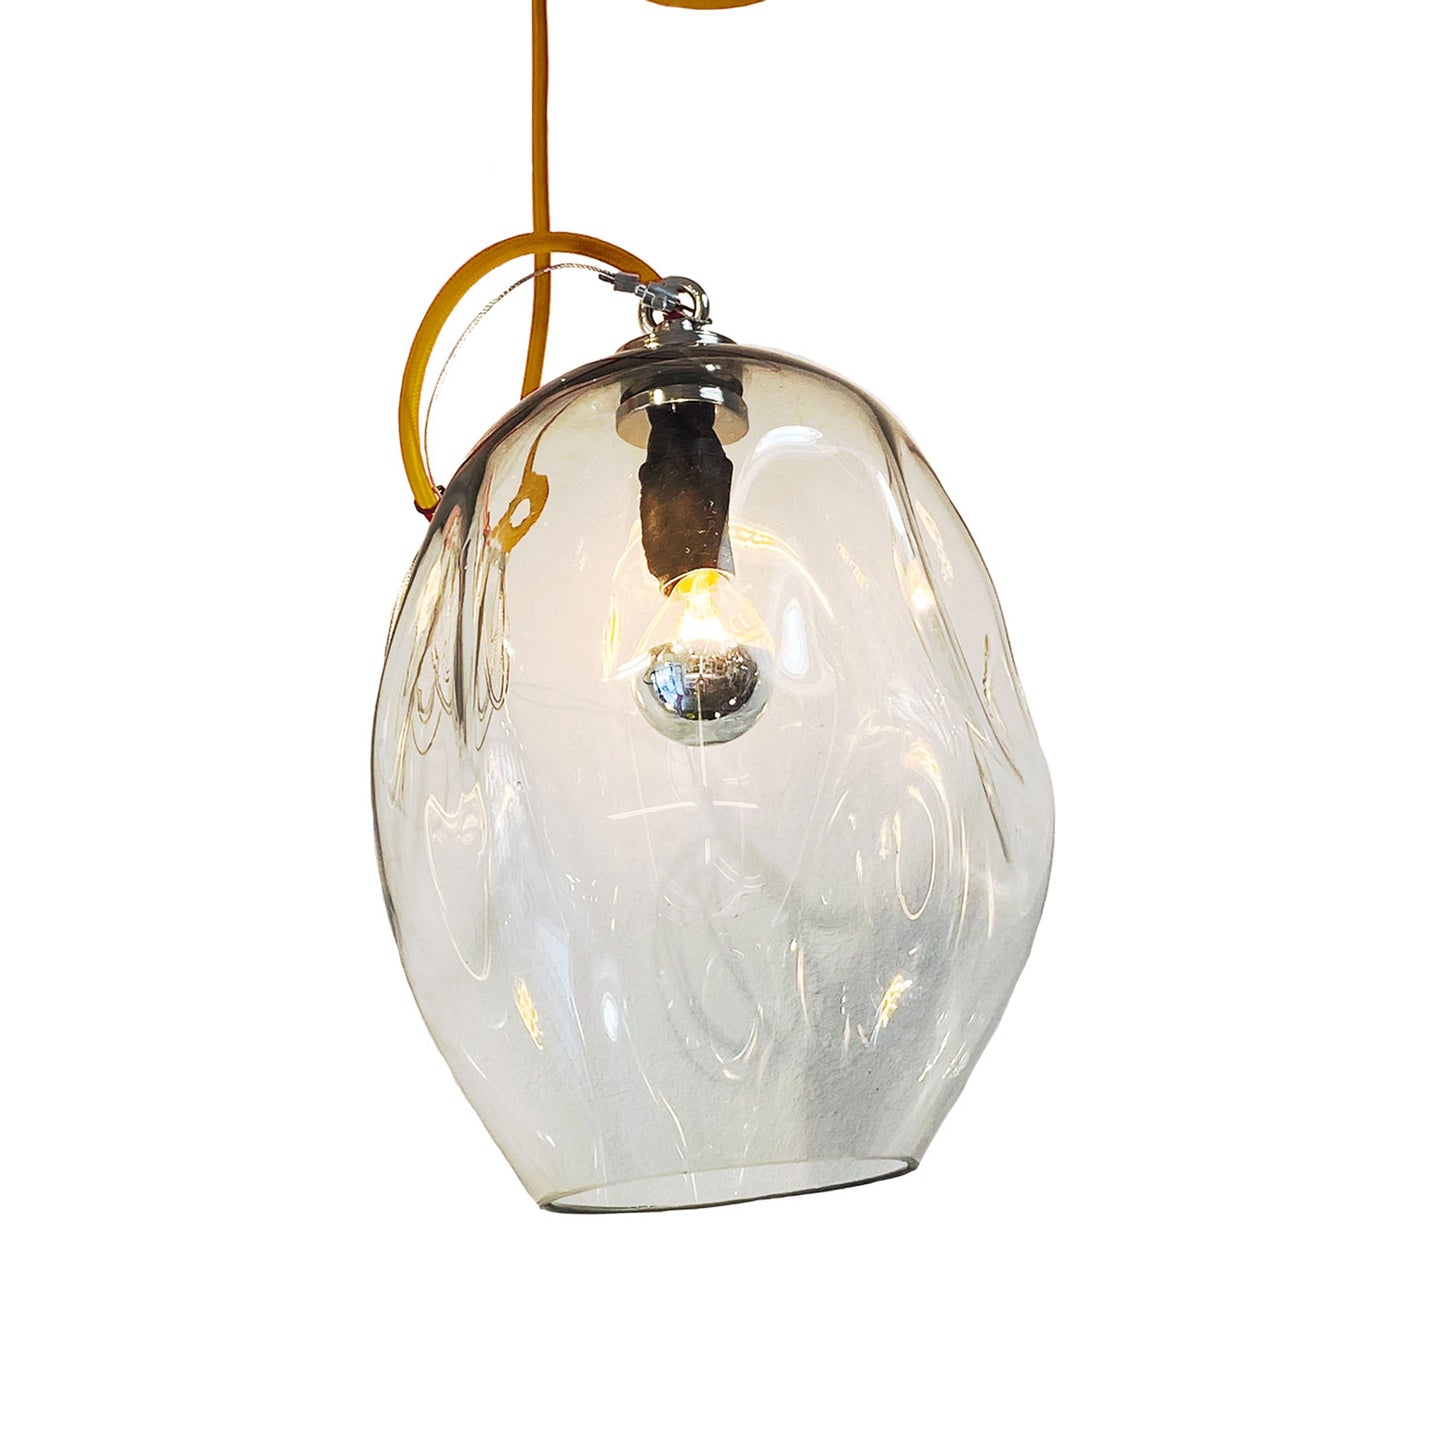 Blown glass lamp - Transparent, Gold Hollow